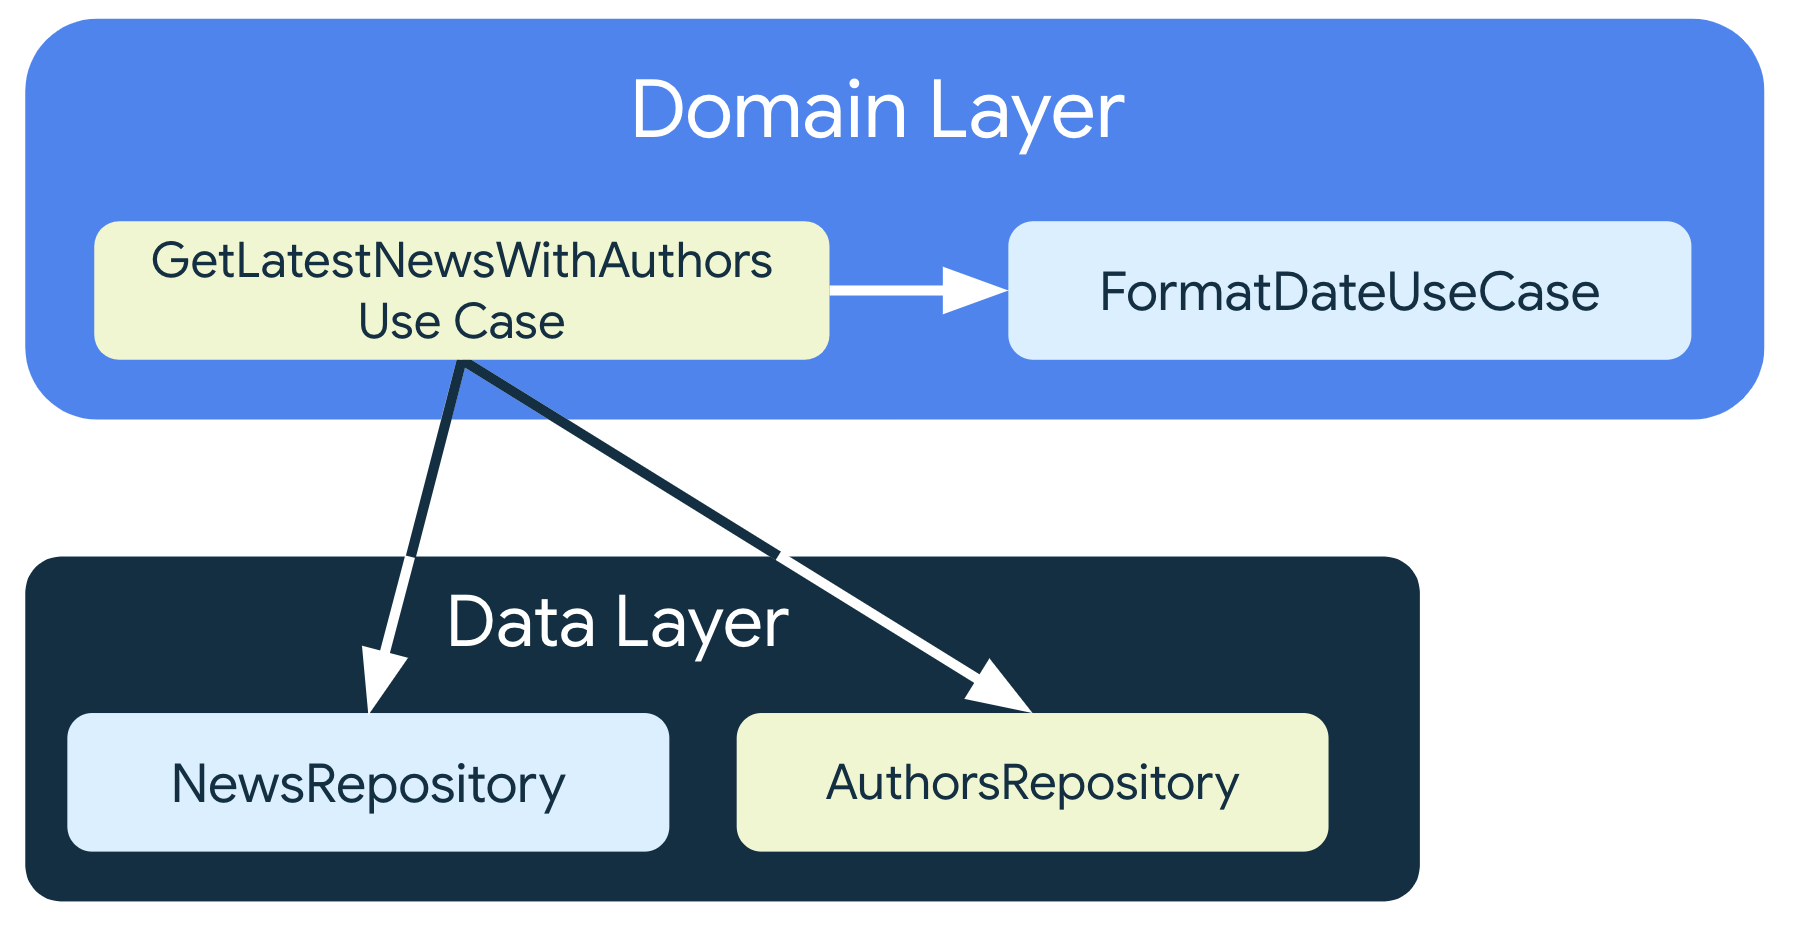 GetLatestNewsWithAuthorsUseCase 依附於資料層的存放區類別，但也依附於 FormatDataUseCase，這是同時屬於網域層的另一項用途類別。